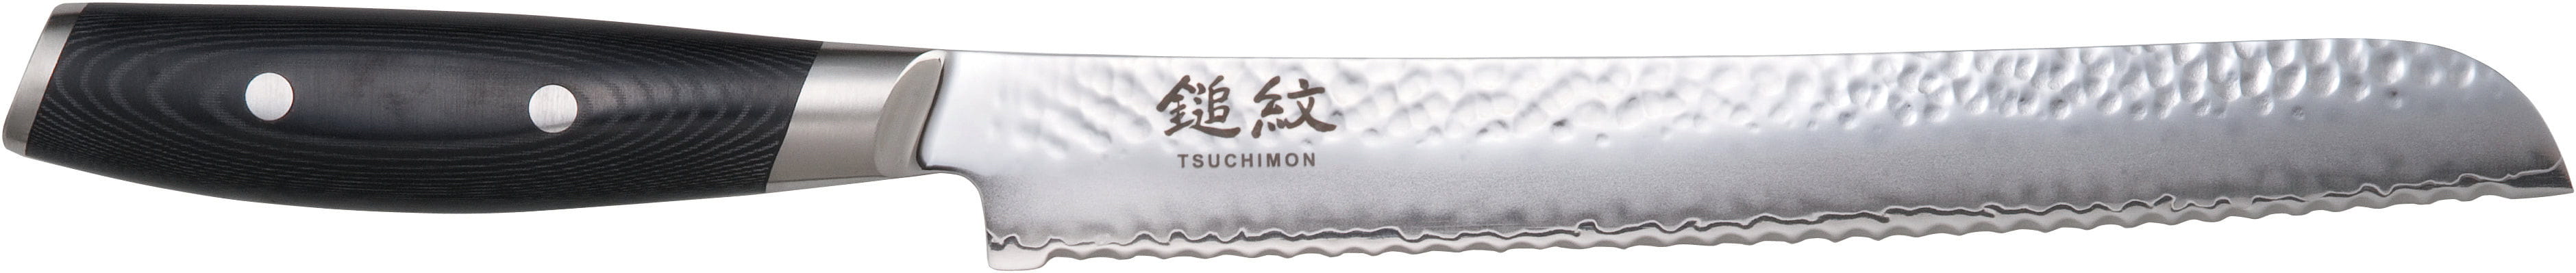 Yaxell Tsuchimon broodmes, 23 cm